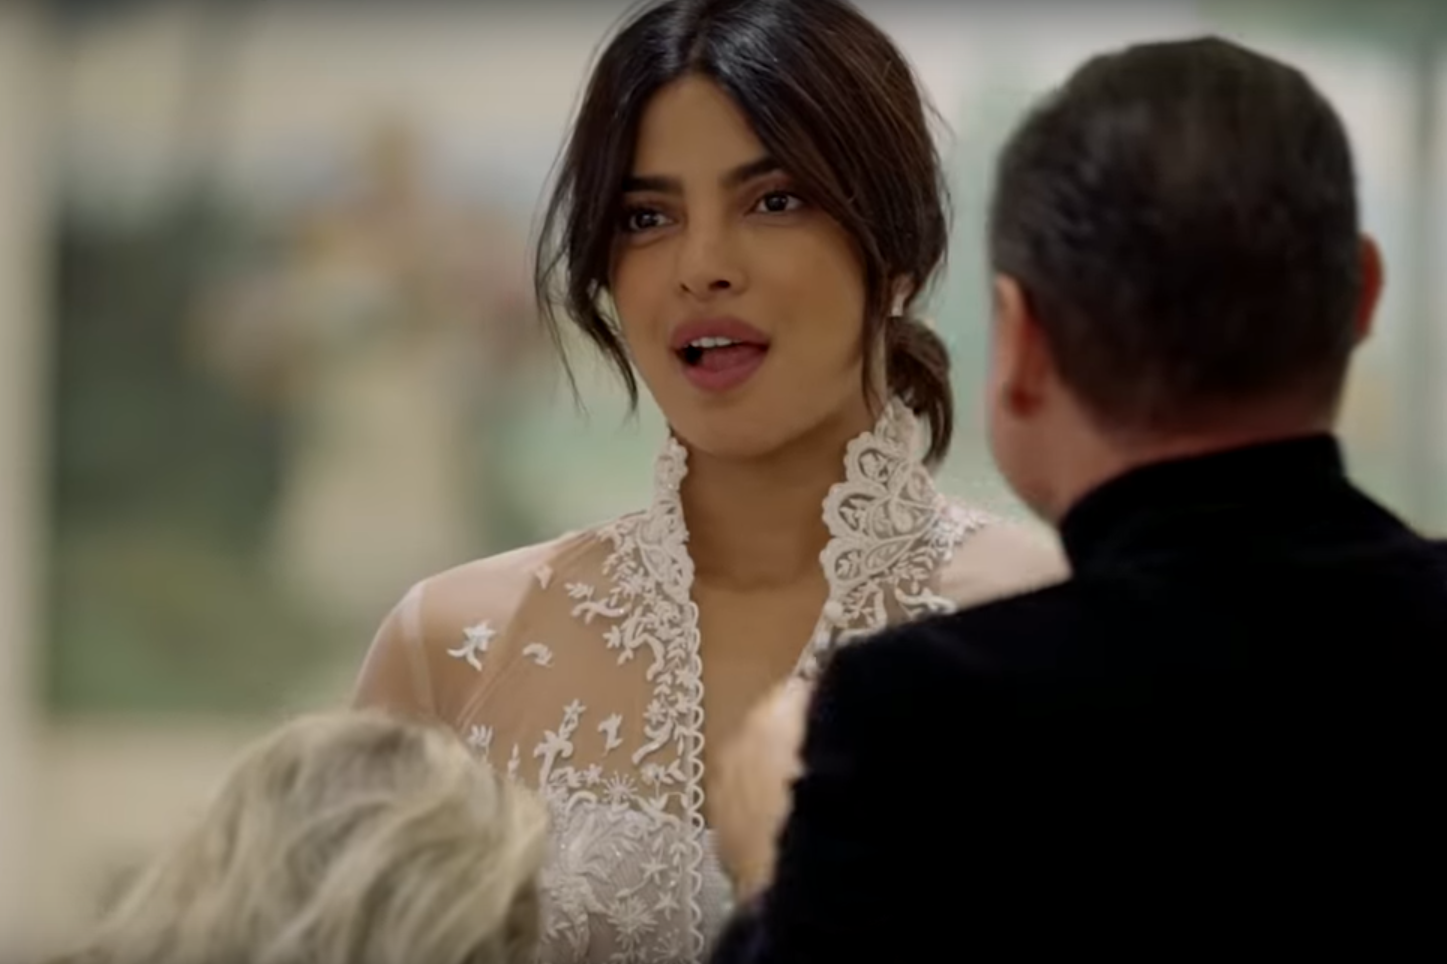 New Videos Reveal Priyanka Chopra's Wedding Gown By Ralph Lauren